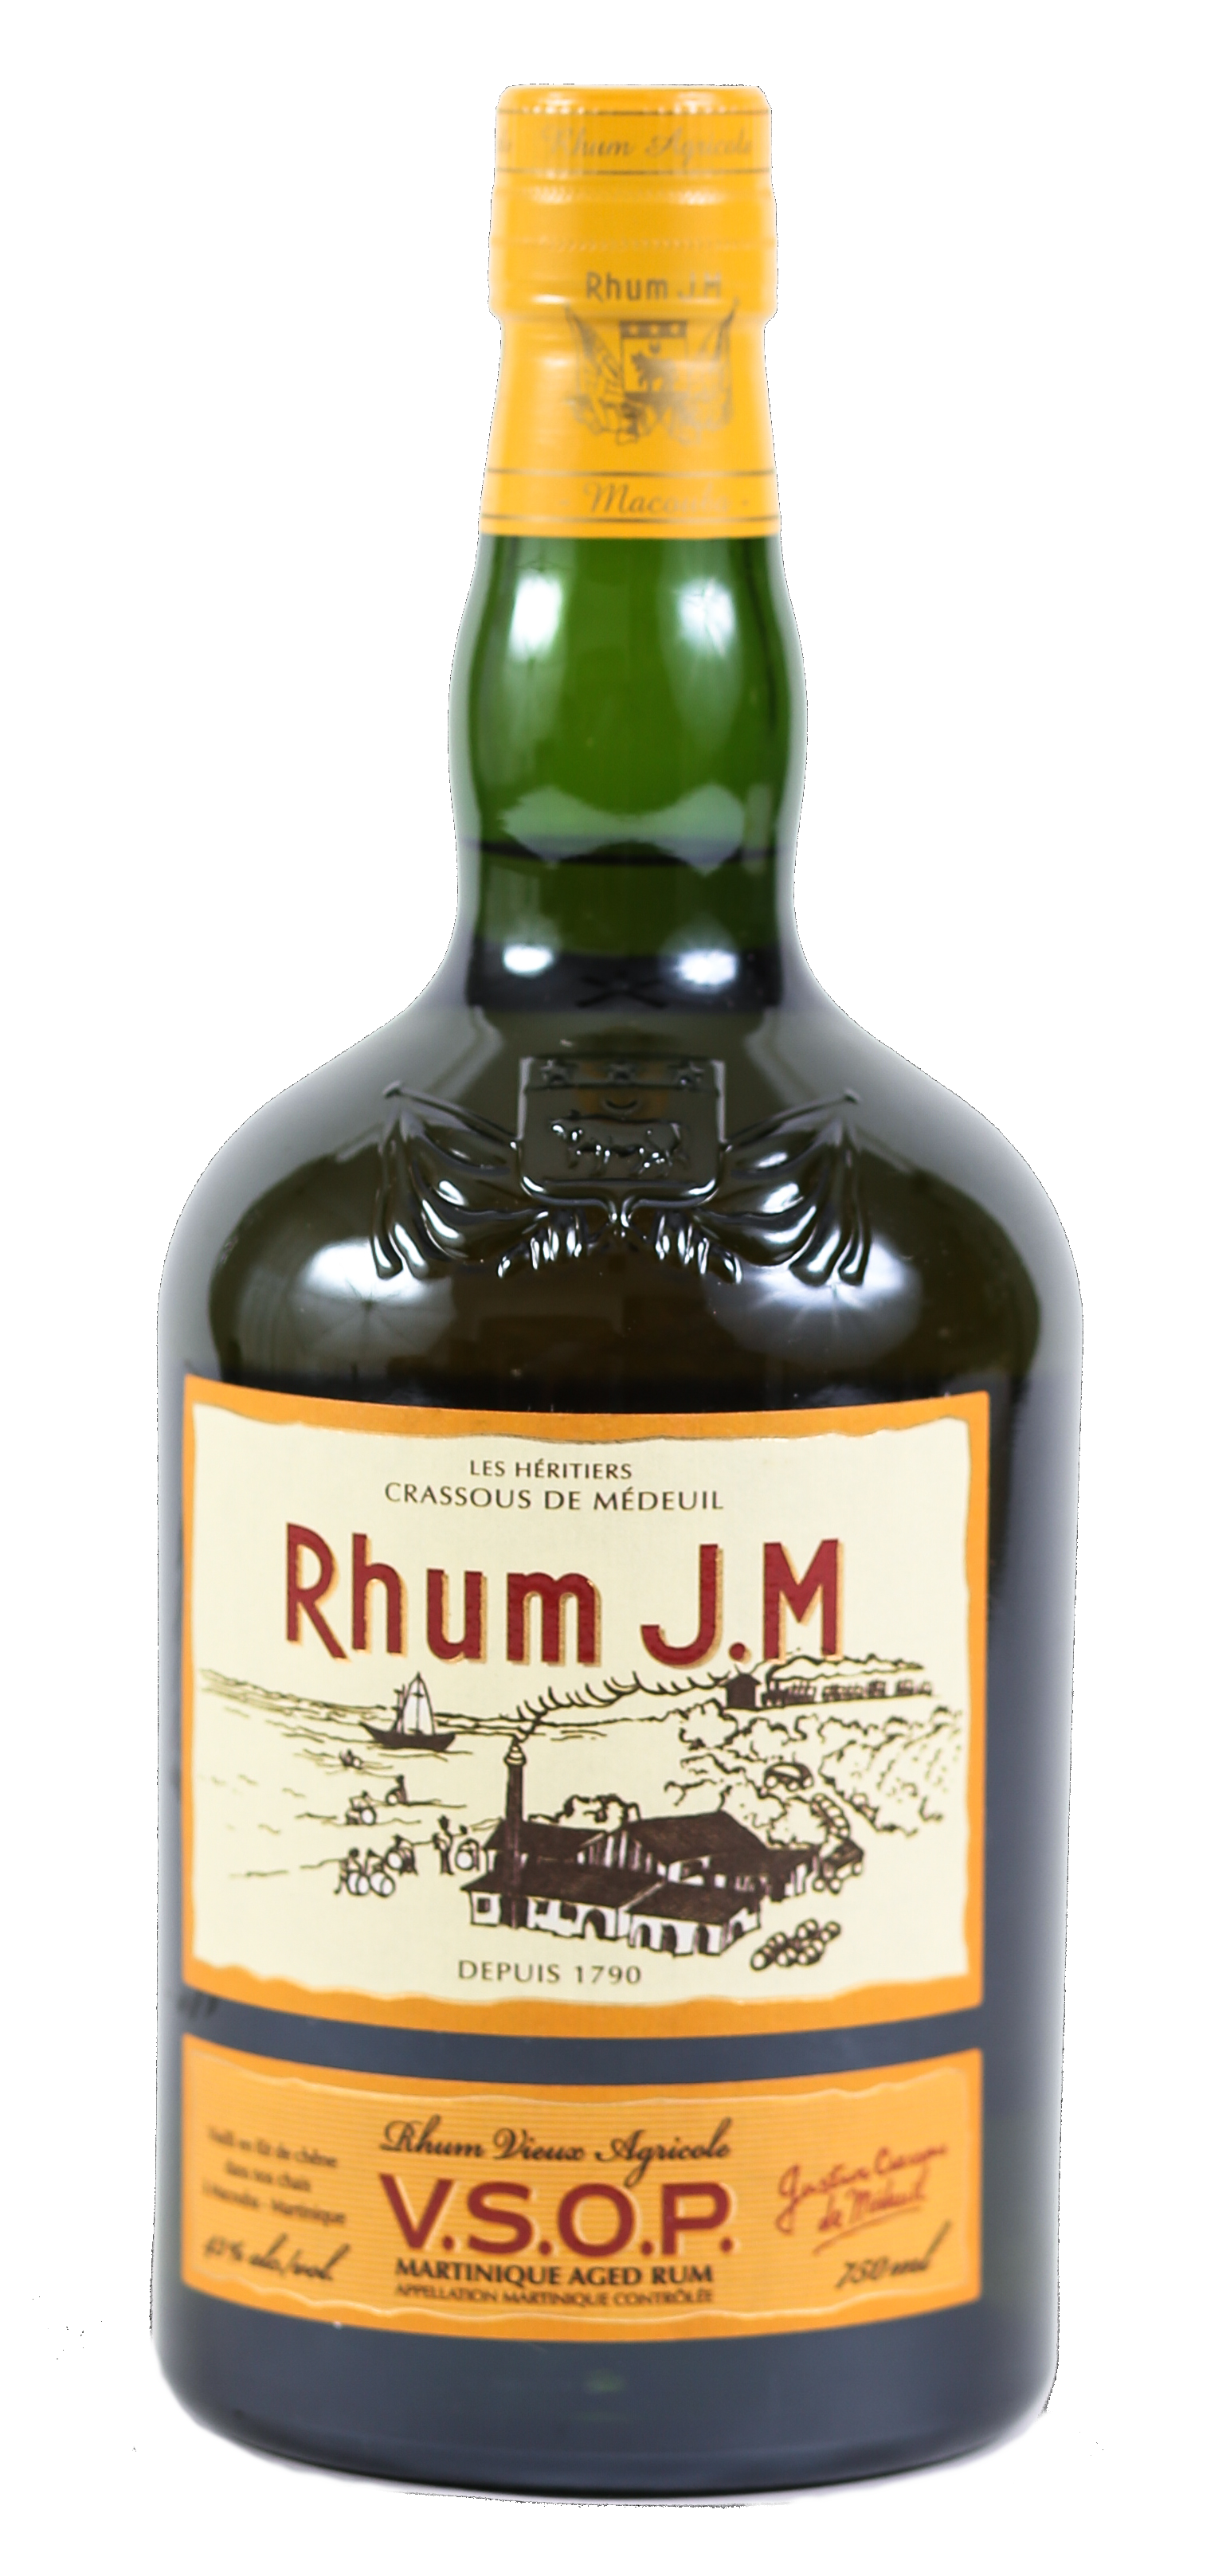 Rhum Agricole VSOP, Rhum JM - Skurnik Wines & Spirits